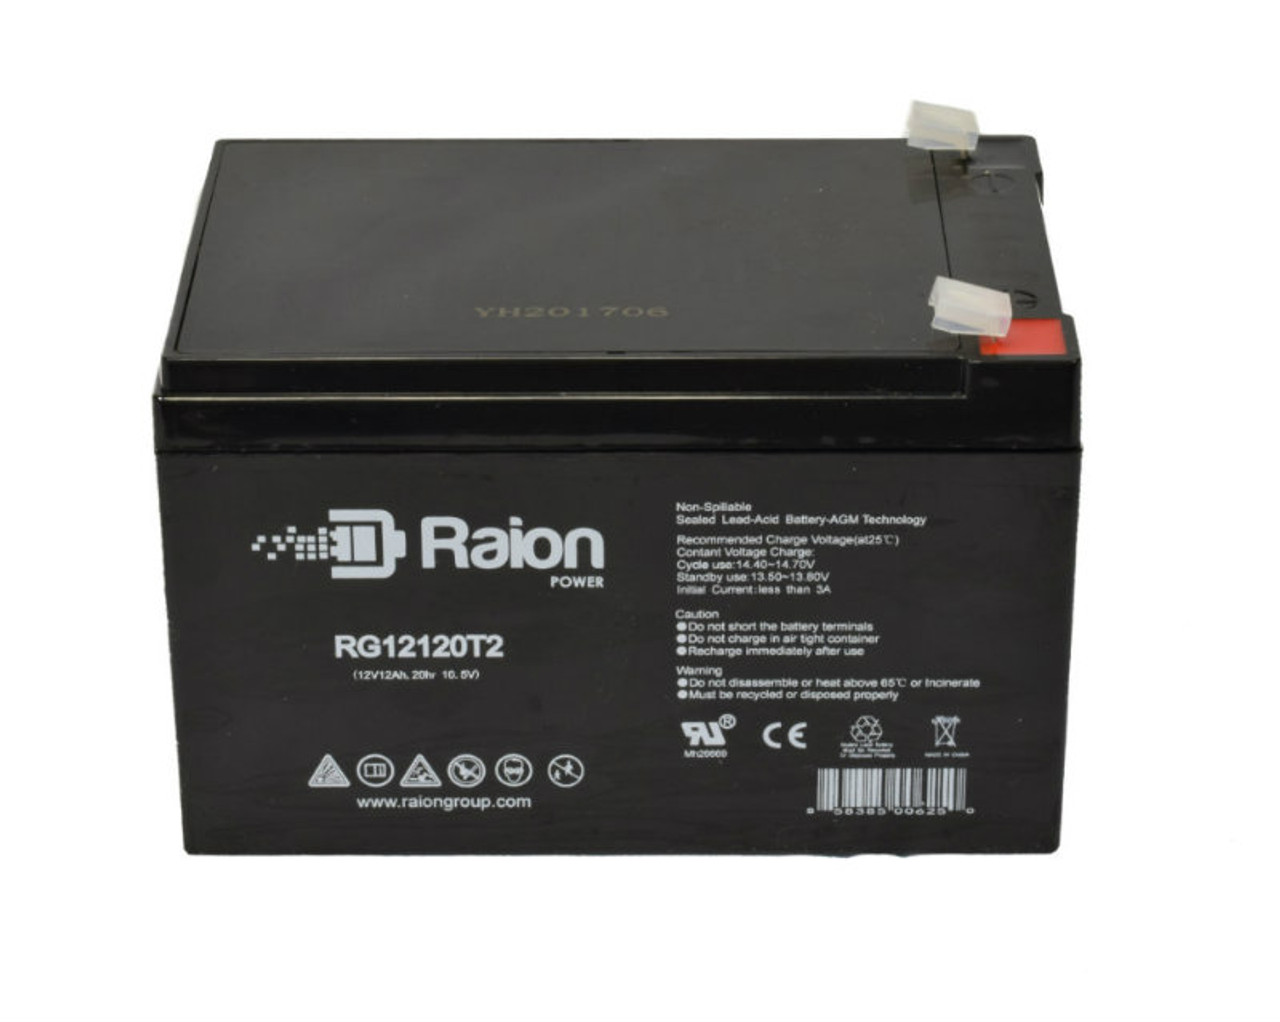 Raion Power RG12120T2 SLA Battery for FIAMM FG21201